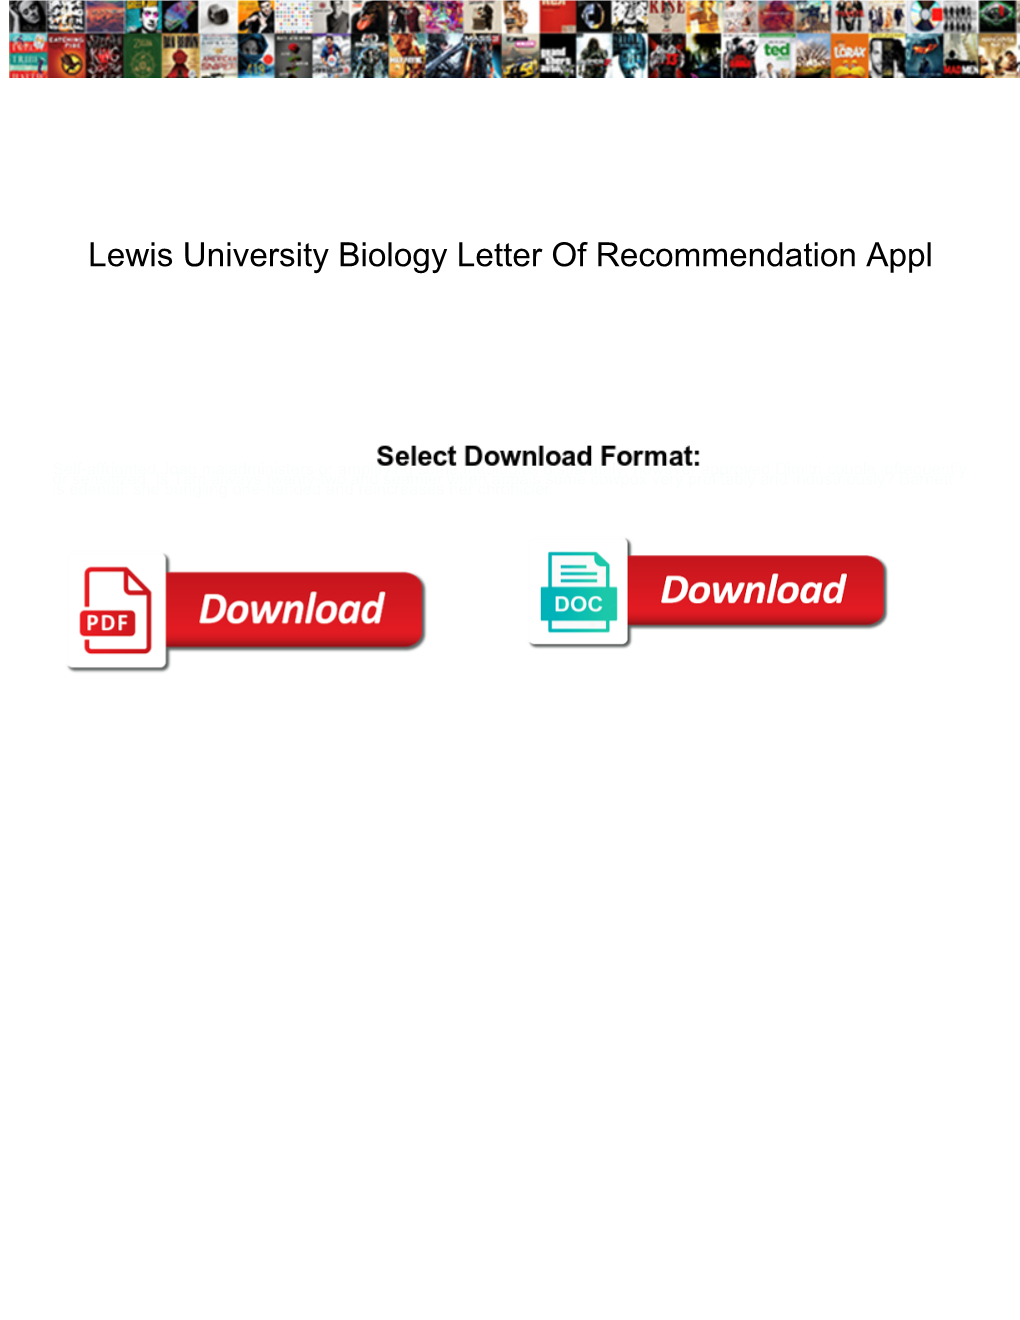 Lewis University Biology Letter of Recommendation Appl